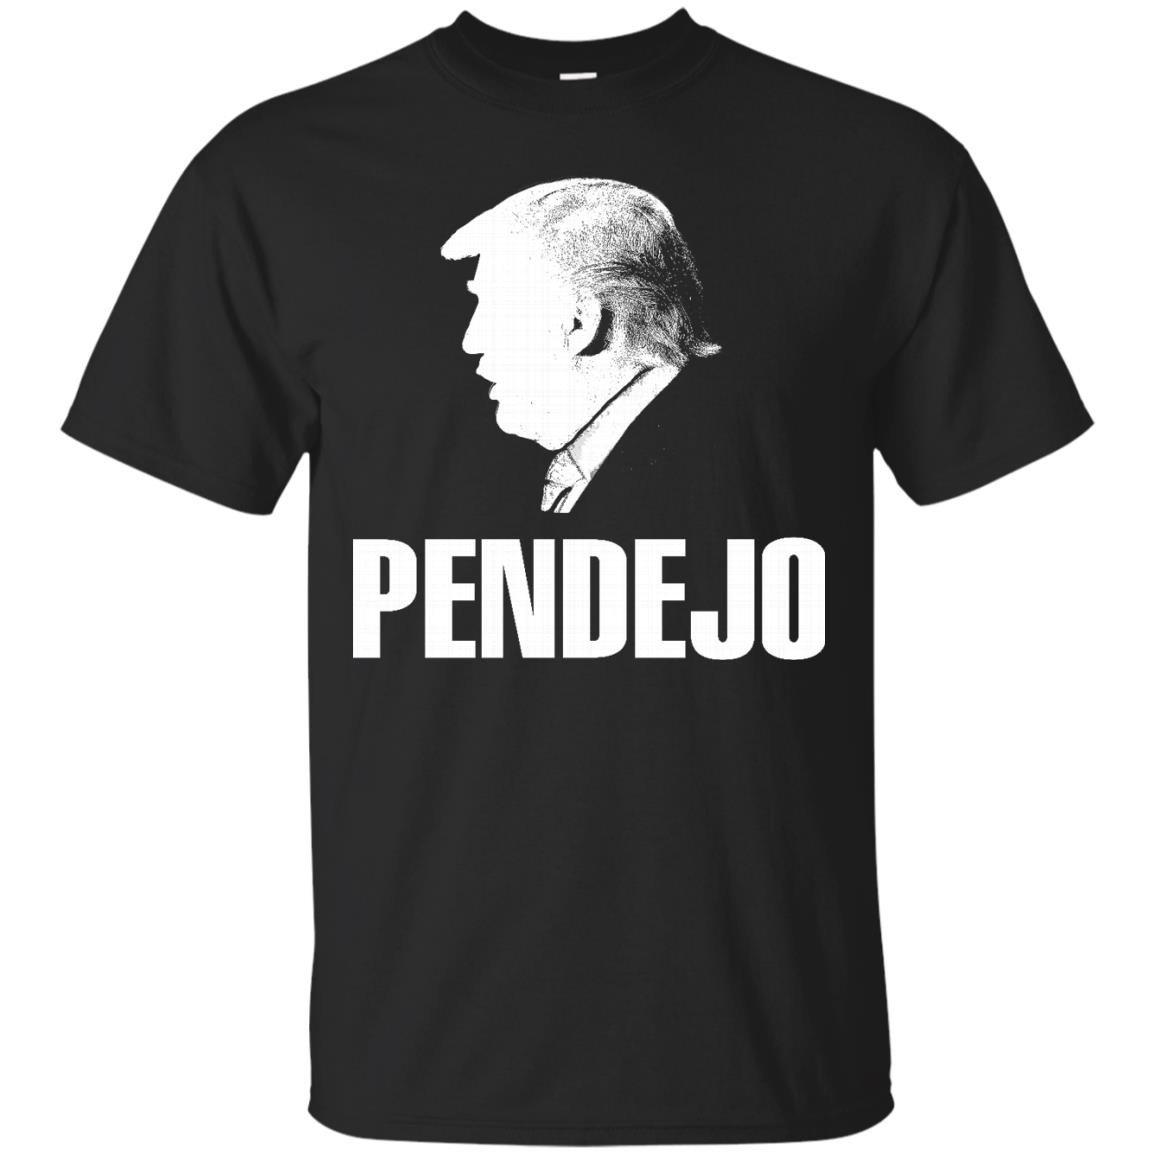 Anti Trump T Shirt Not My President Never T-Shirt - $19.99 - $24.99